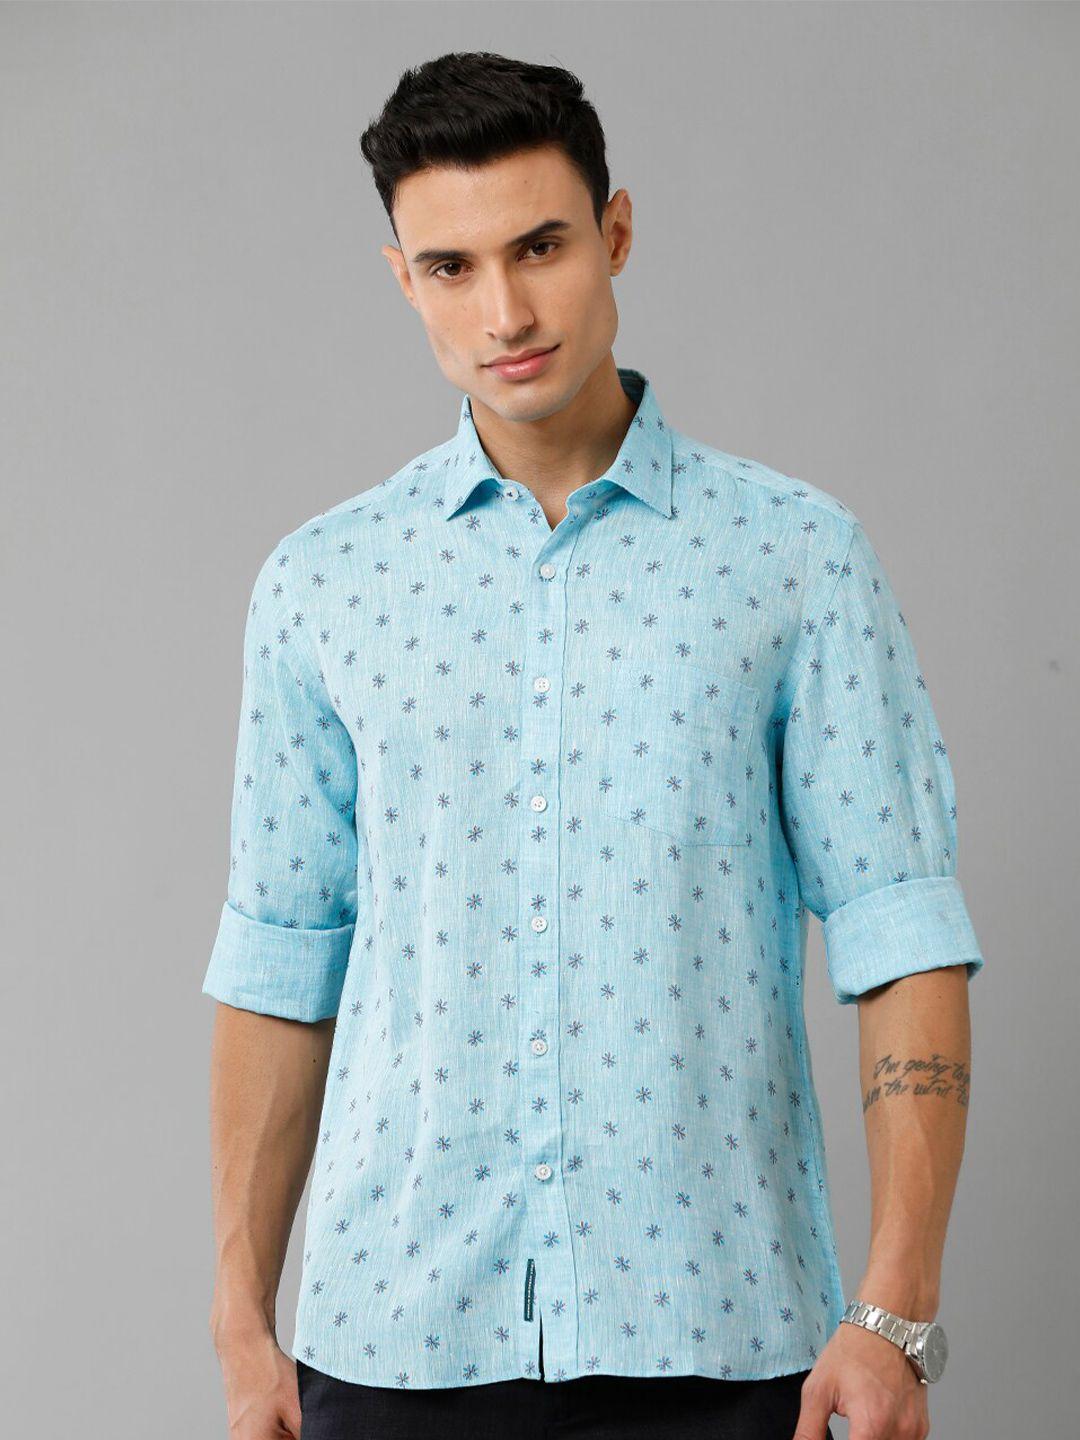 linen club conversational printed pure linen casual shirt